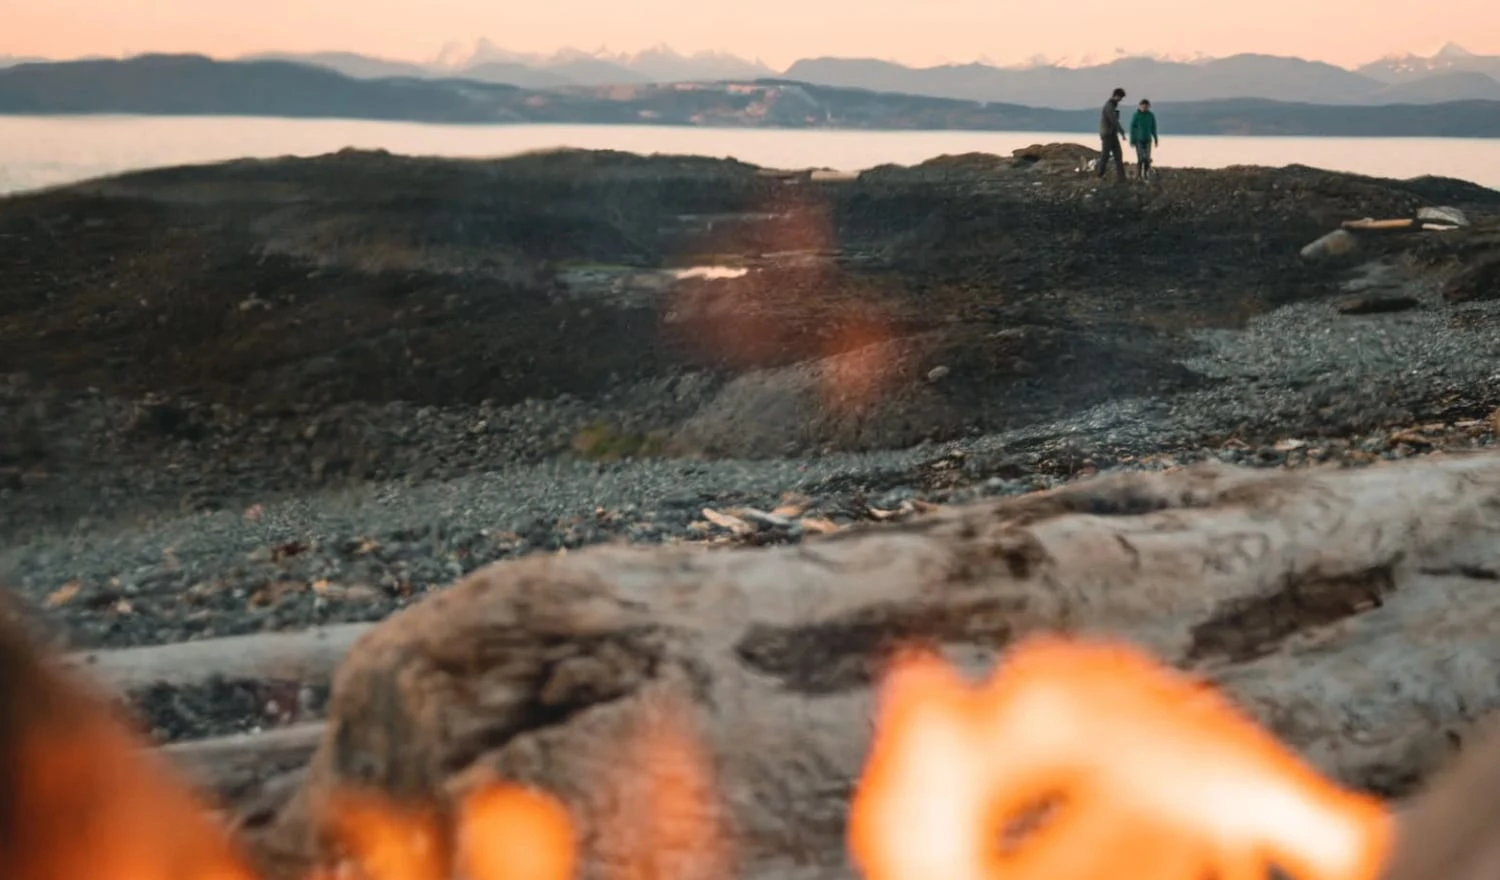 Couple walking on a beach near a bonfire